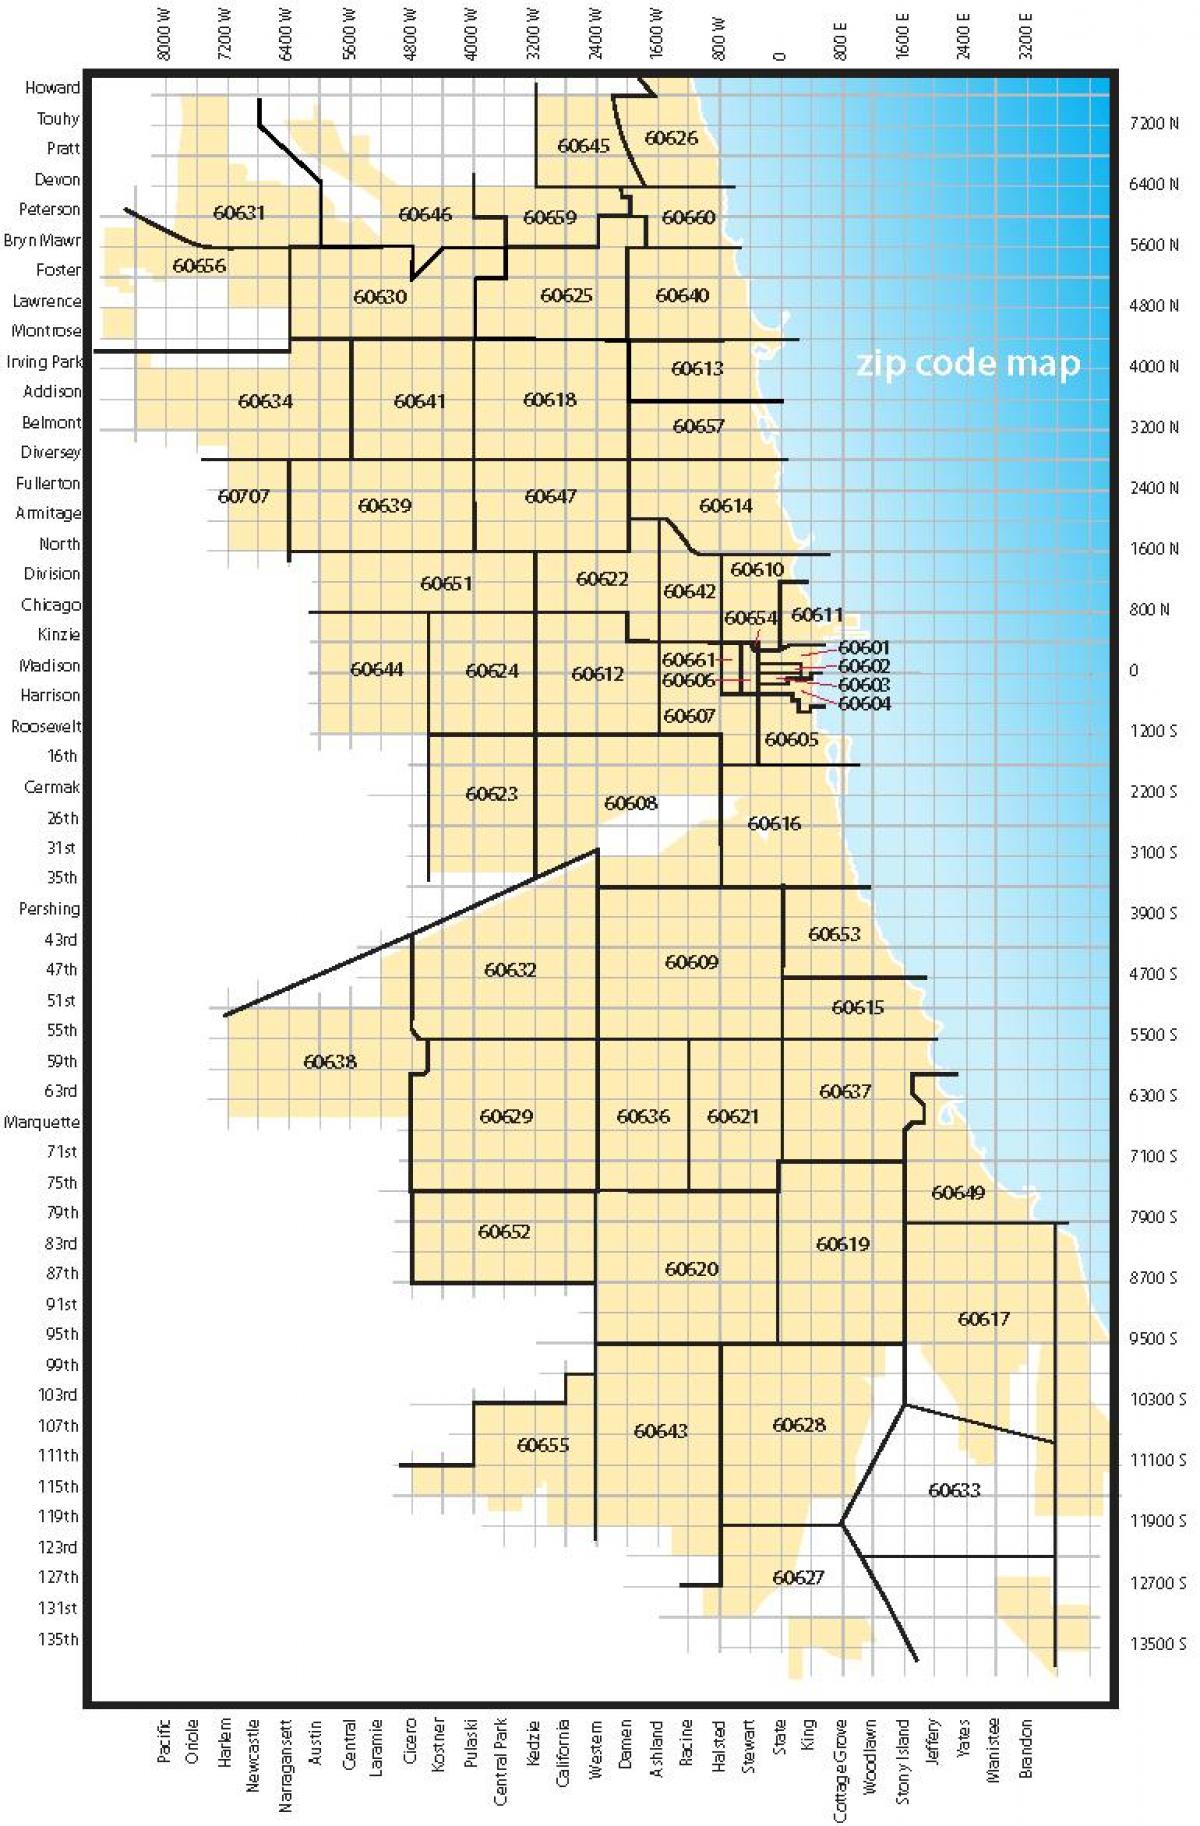 Chicago oblast kód mapě